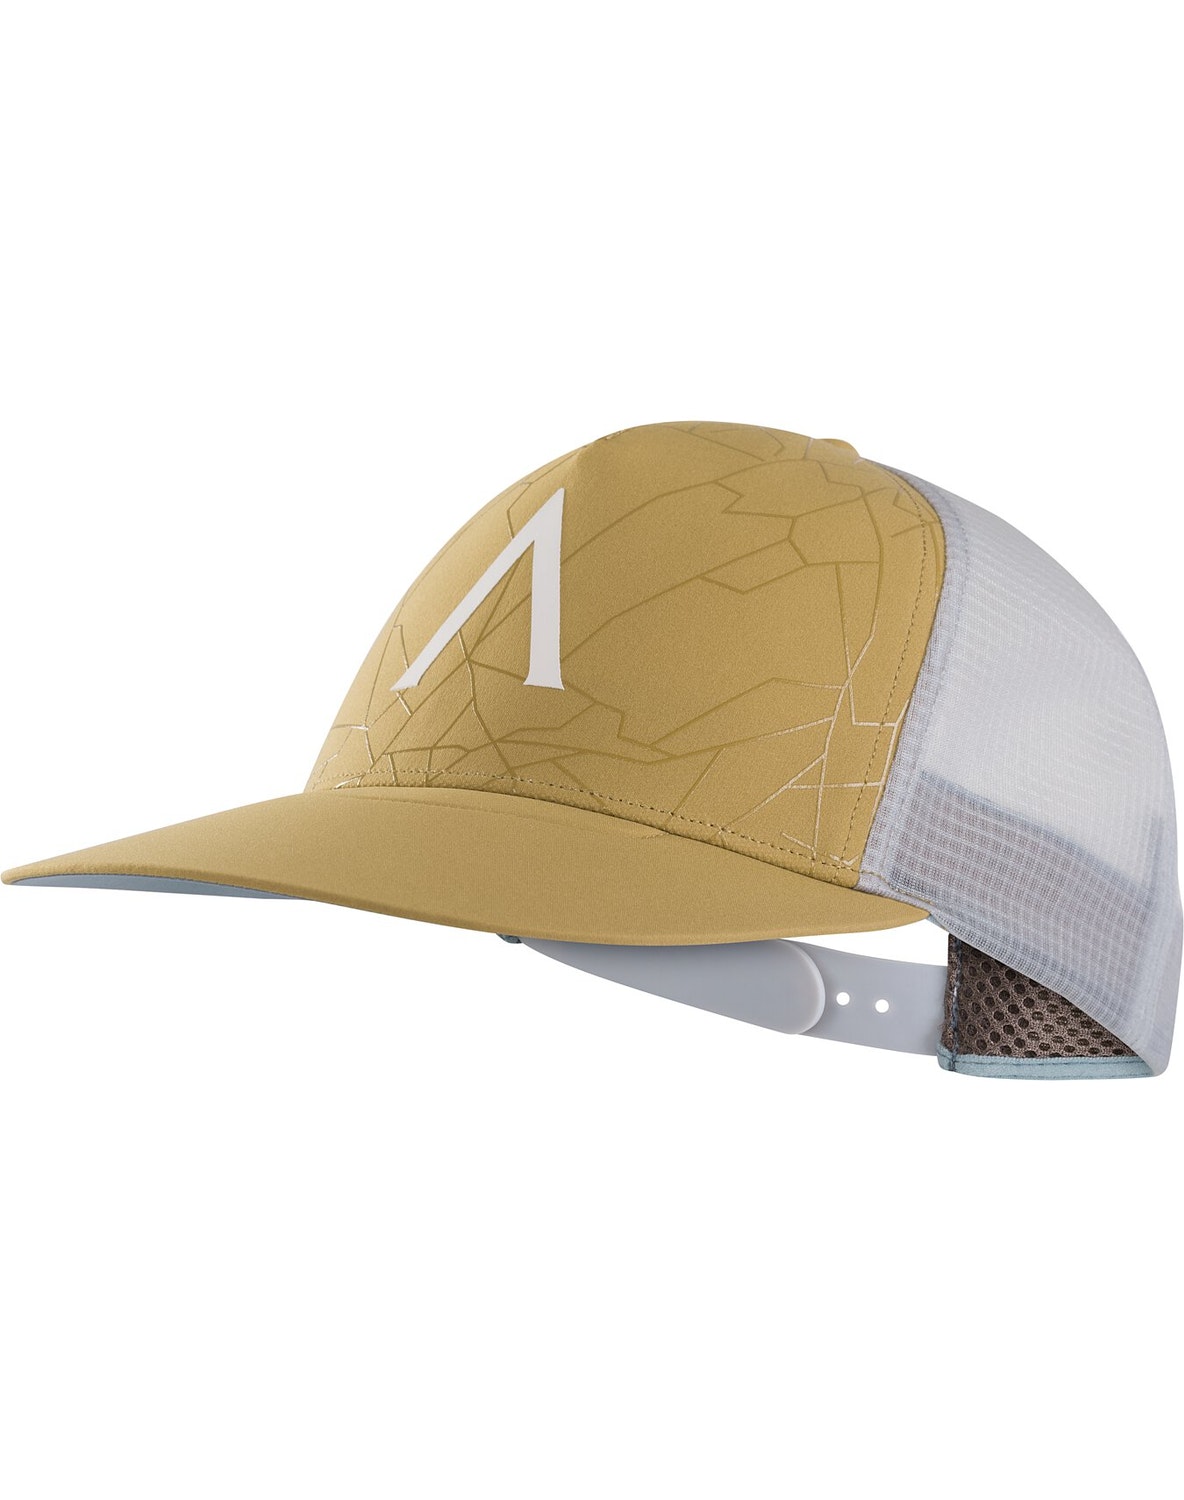 Hats Arc'teryx Fractus Uomo Gialle/Bianche - IT-5373953